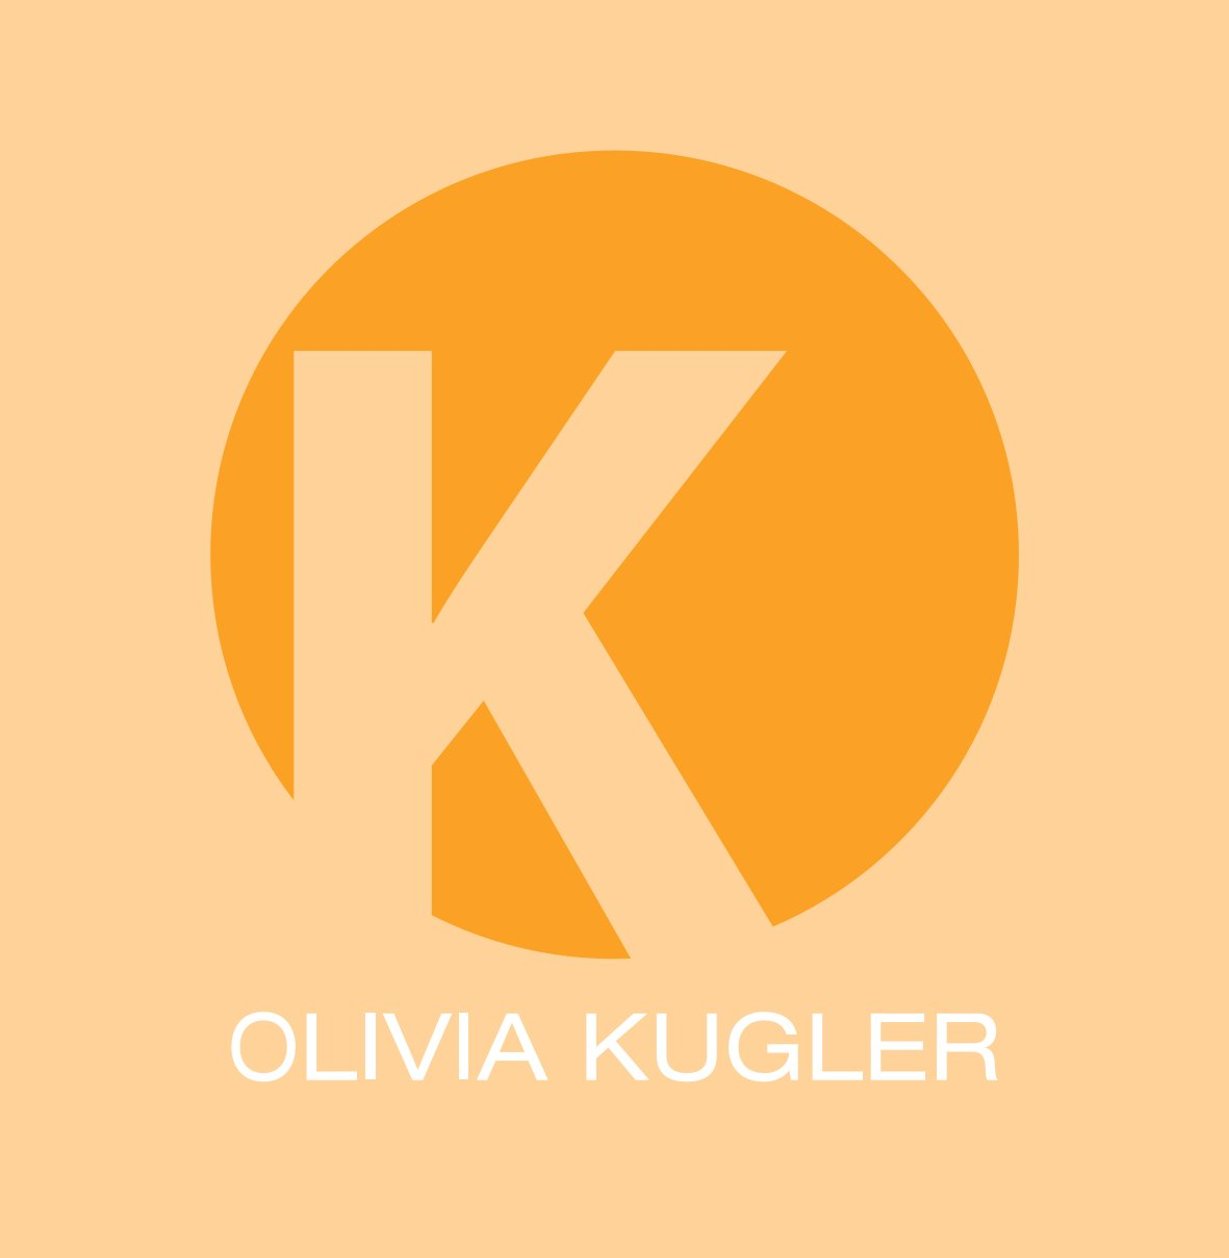 Olivia Kugler